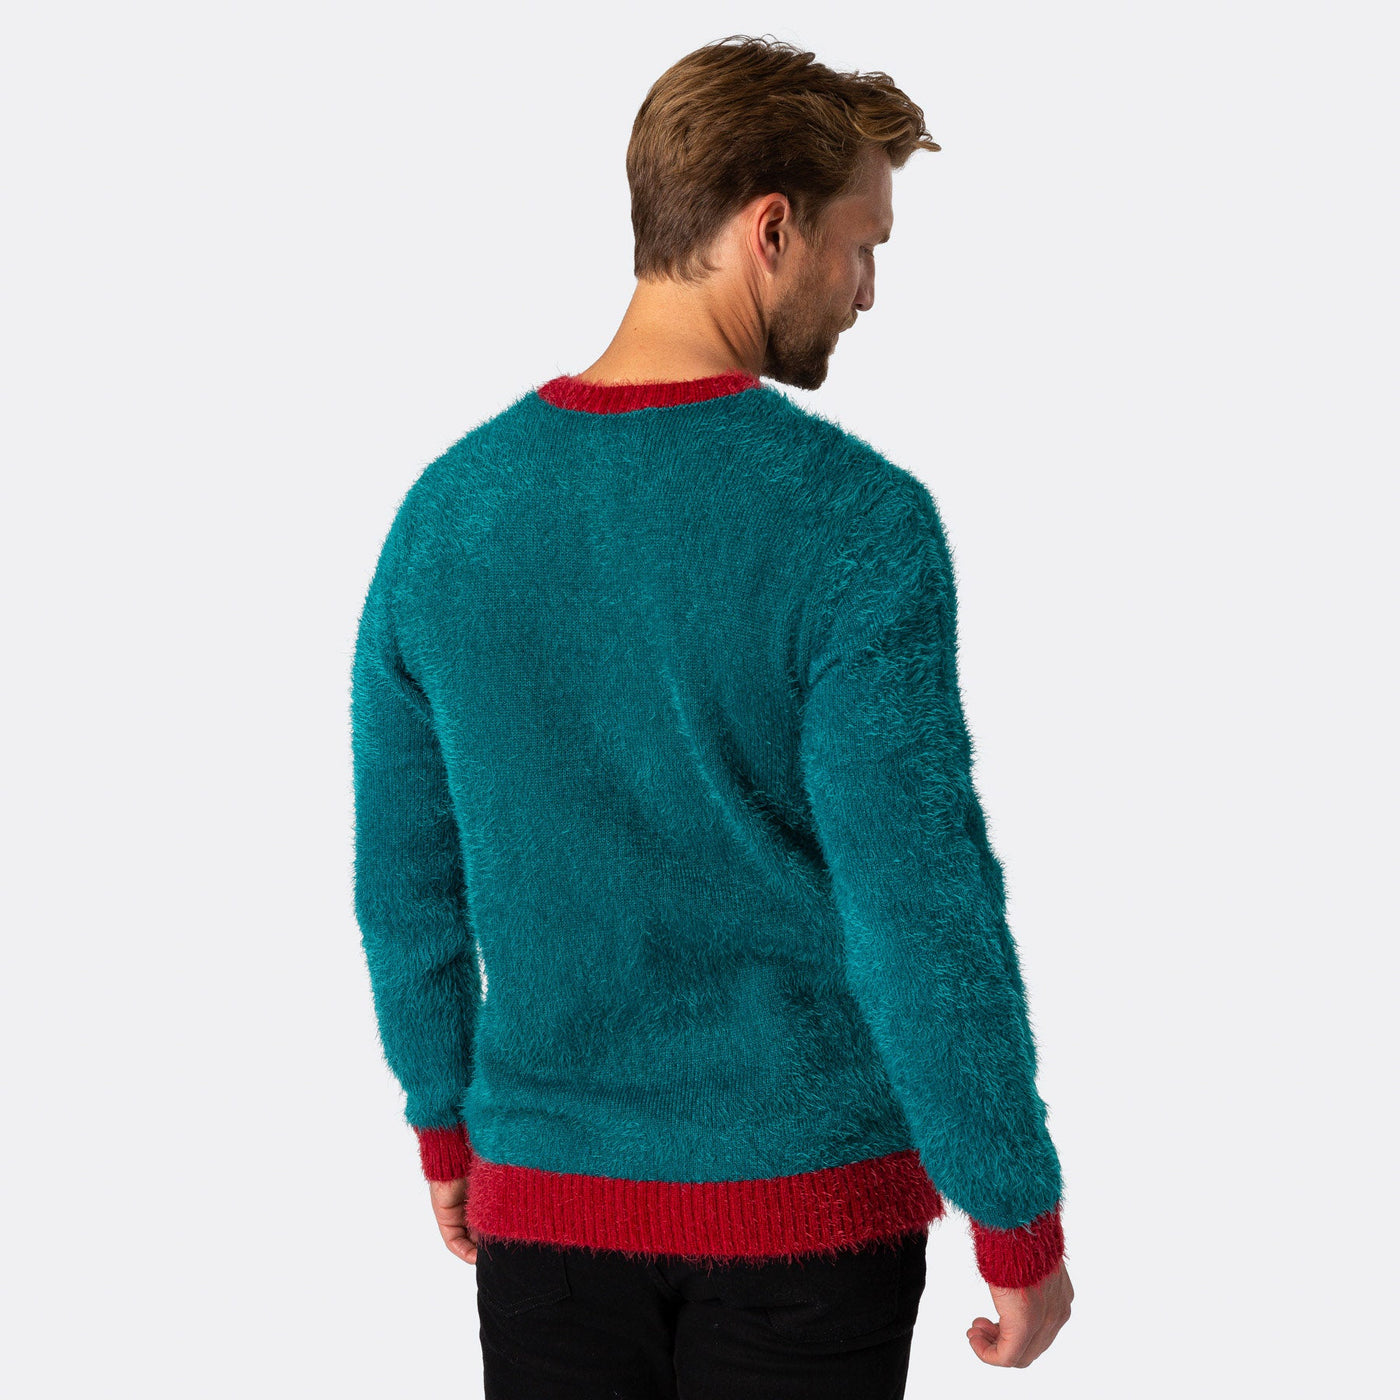 Men's Christmas Tree Christmas Sweater